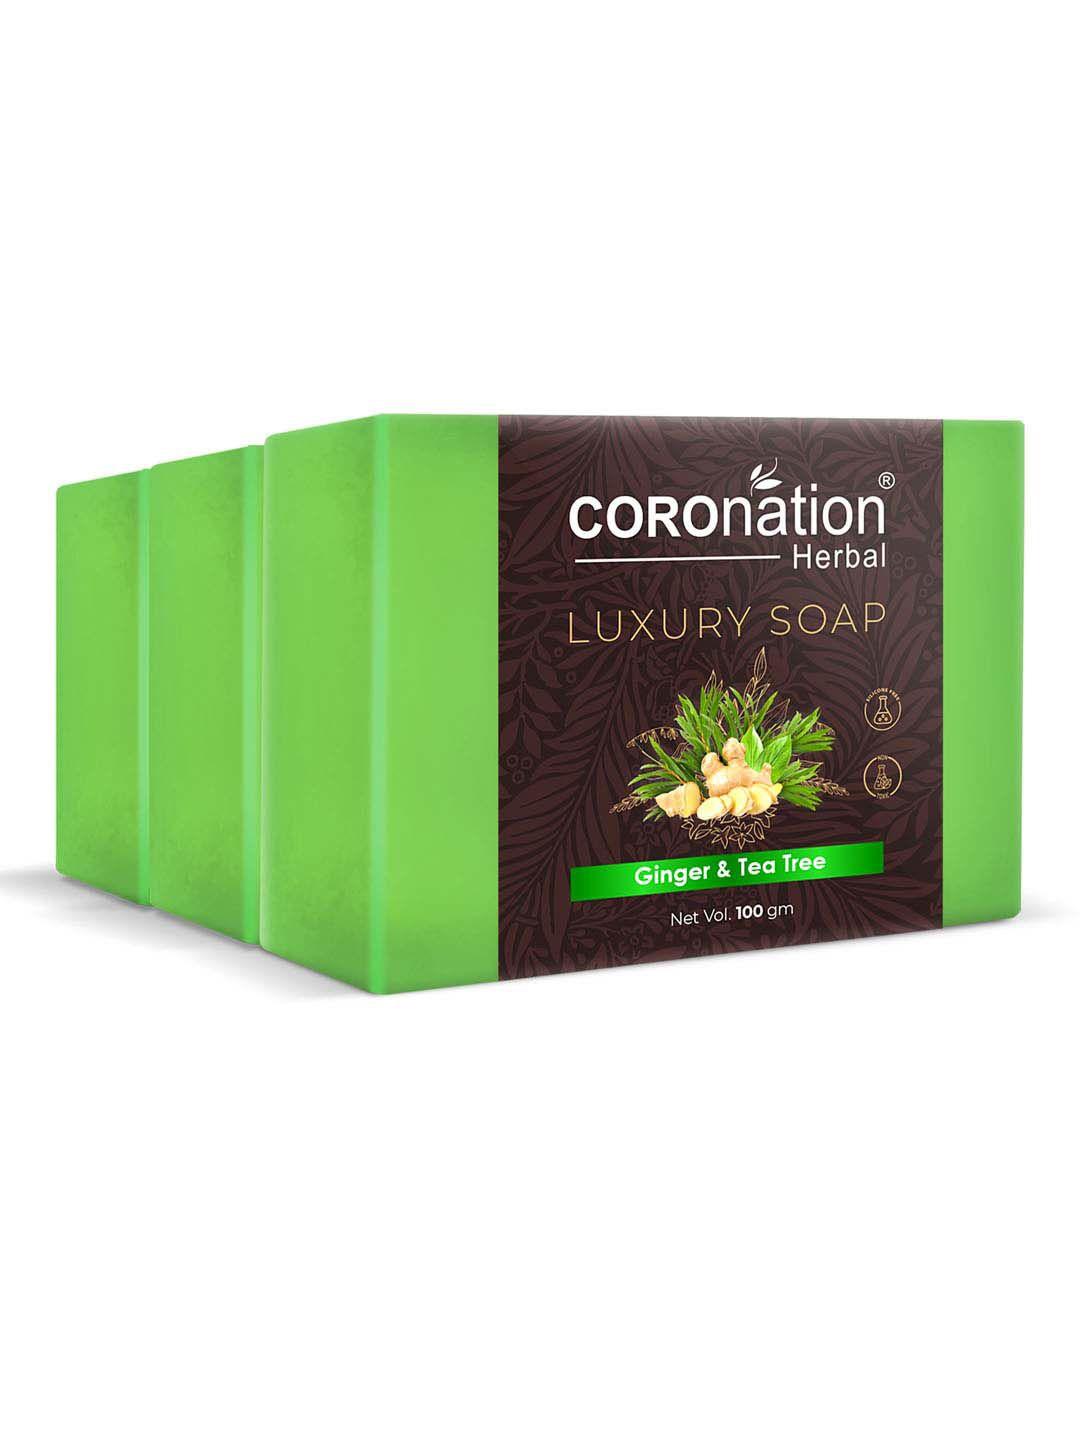 coronation herbal set of 3 ginger & tea tree luxury soap - 100 g each